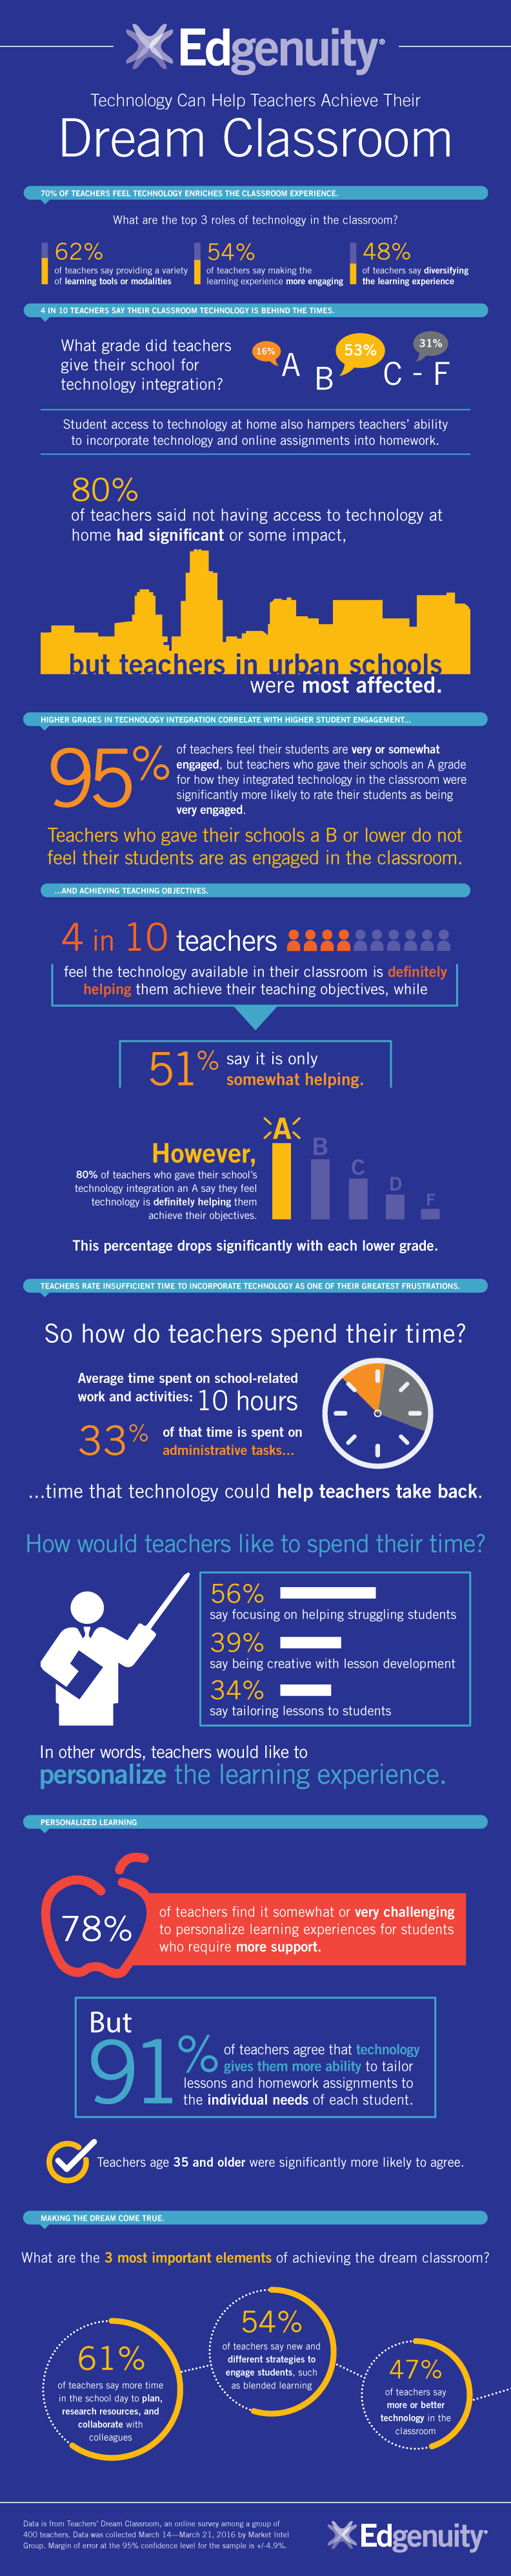 EdTech and Teachers' Dream Classroom Infographic